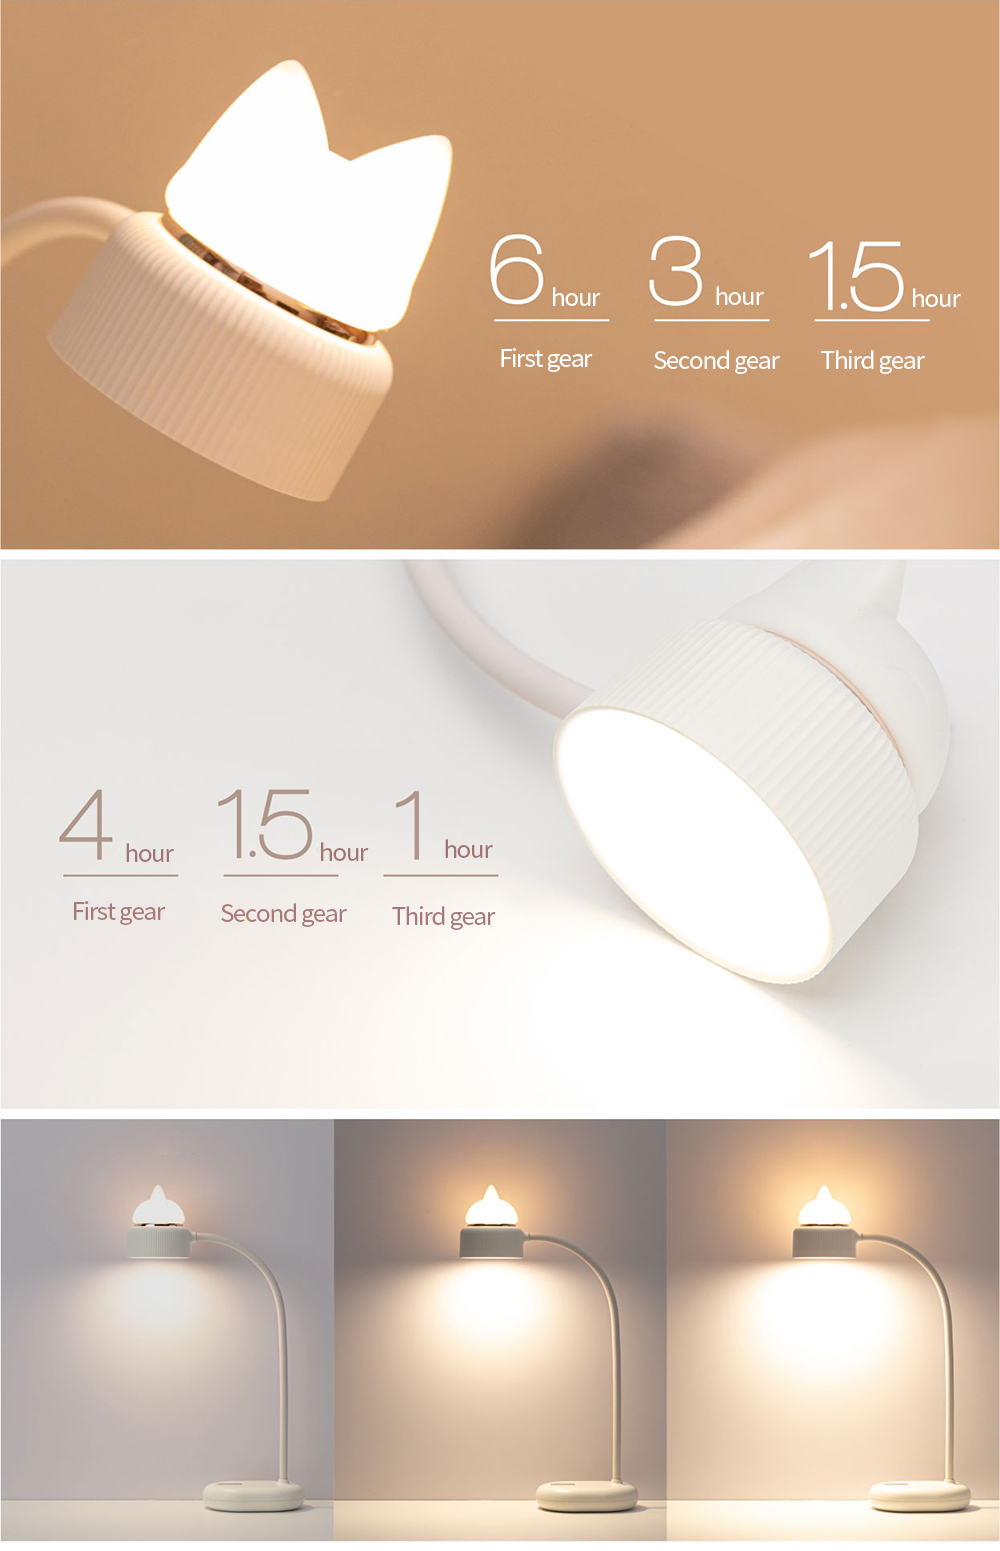 3life-Flexible-LED-Desk-Light-Three-Gear-Adjustable-Cat-Reading-Night-Light-Table-Lamp-from-1538472-6